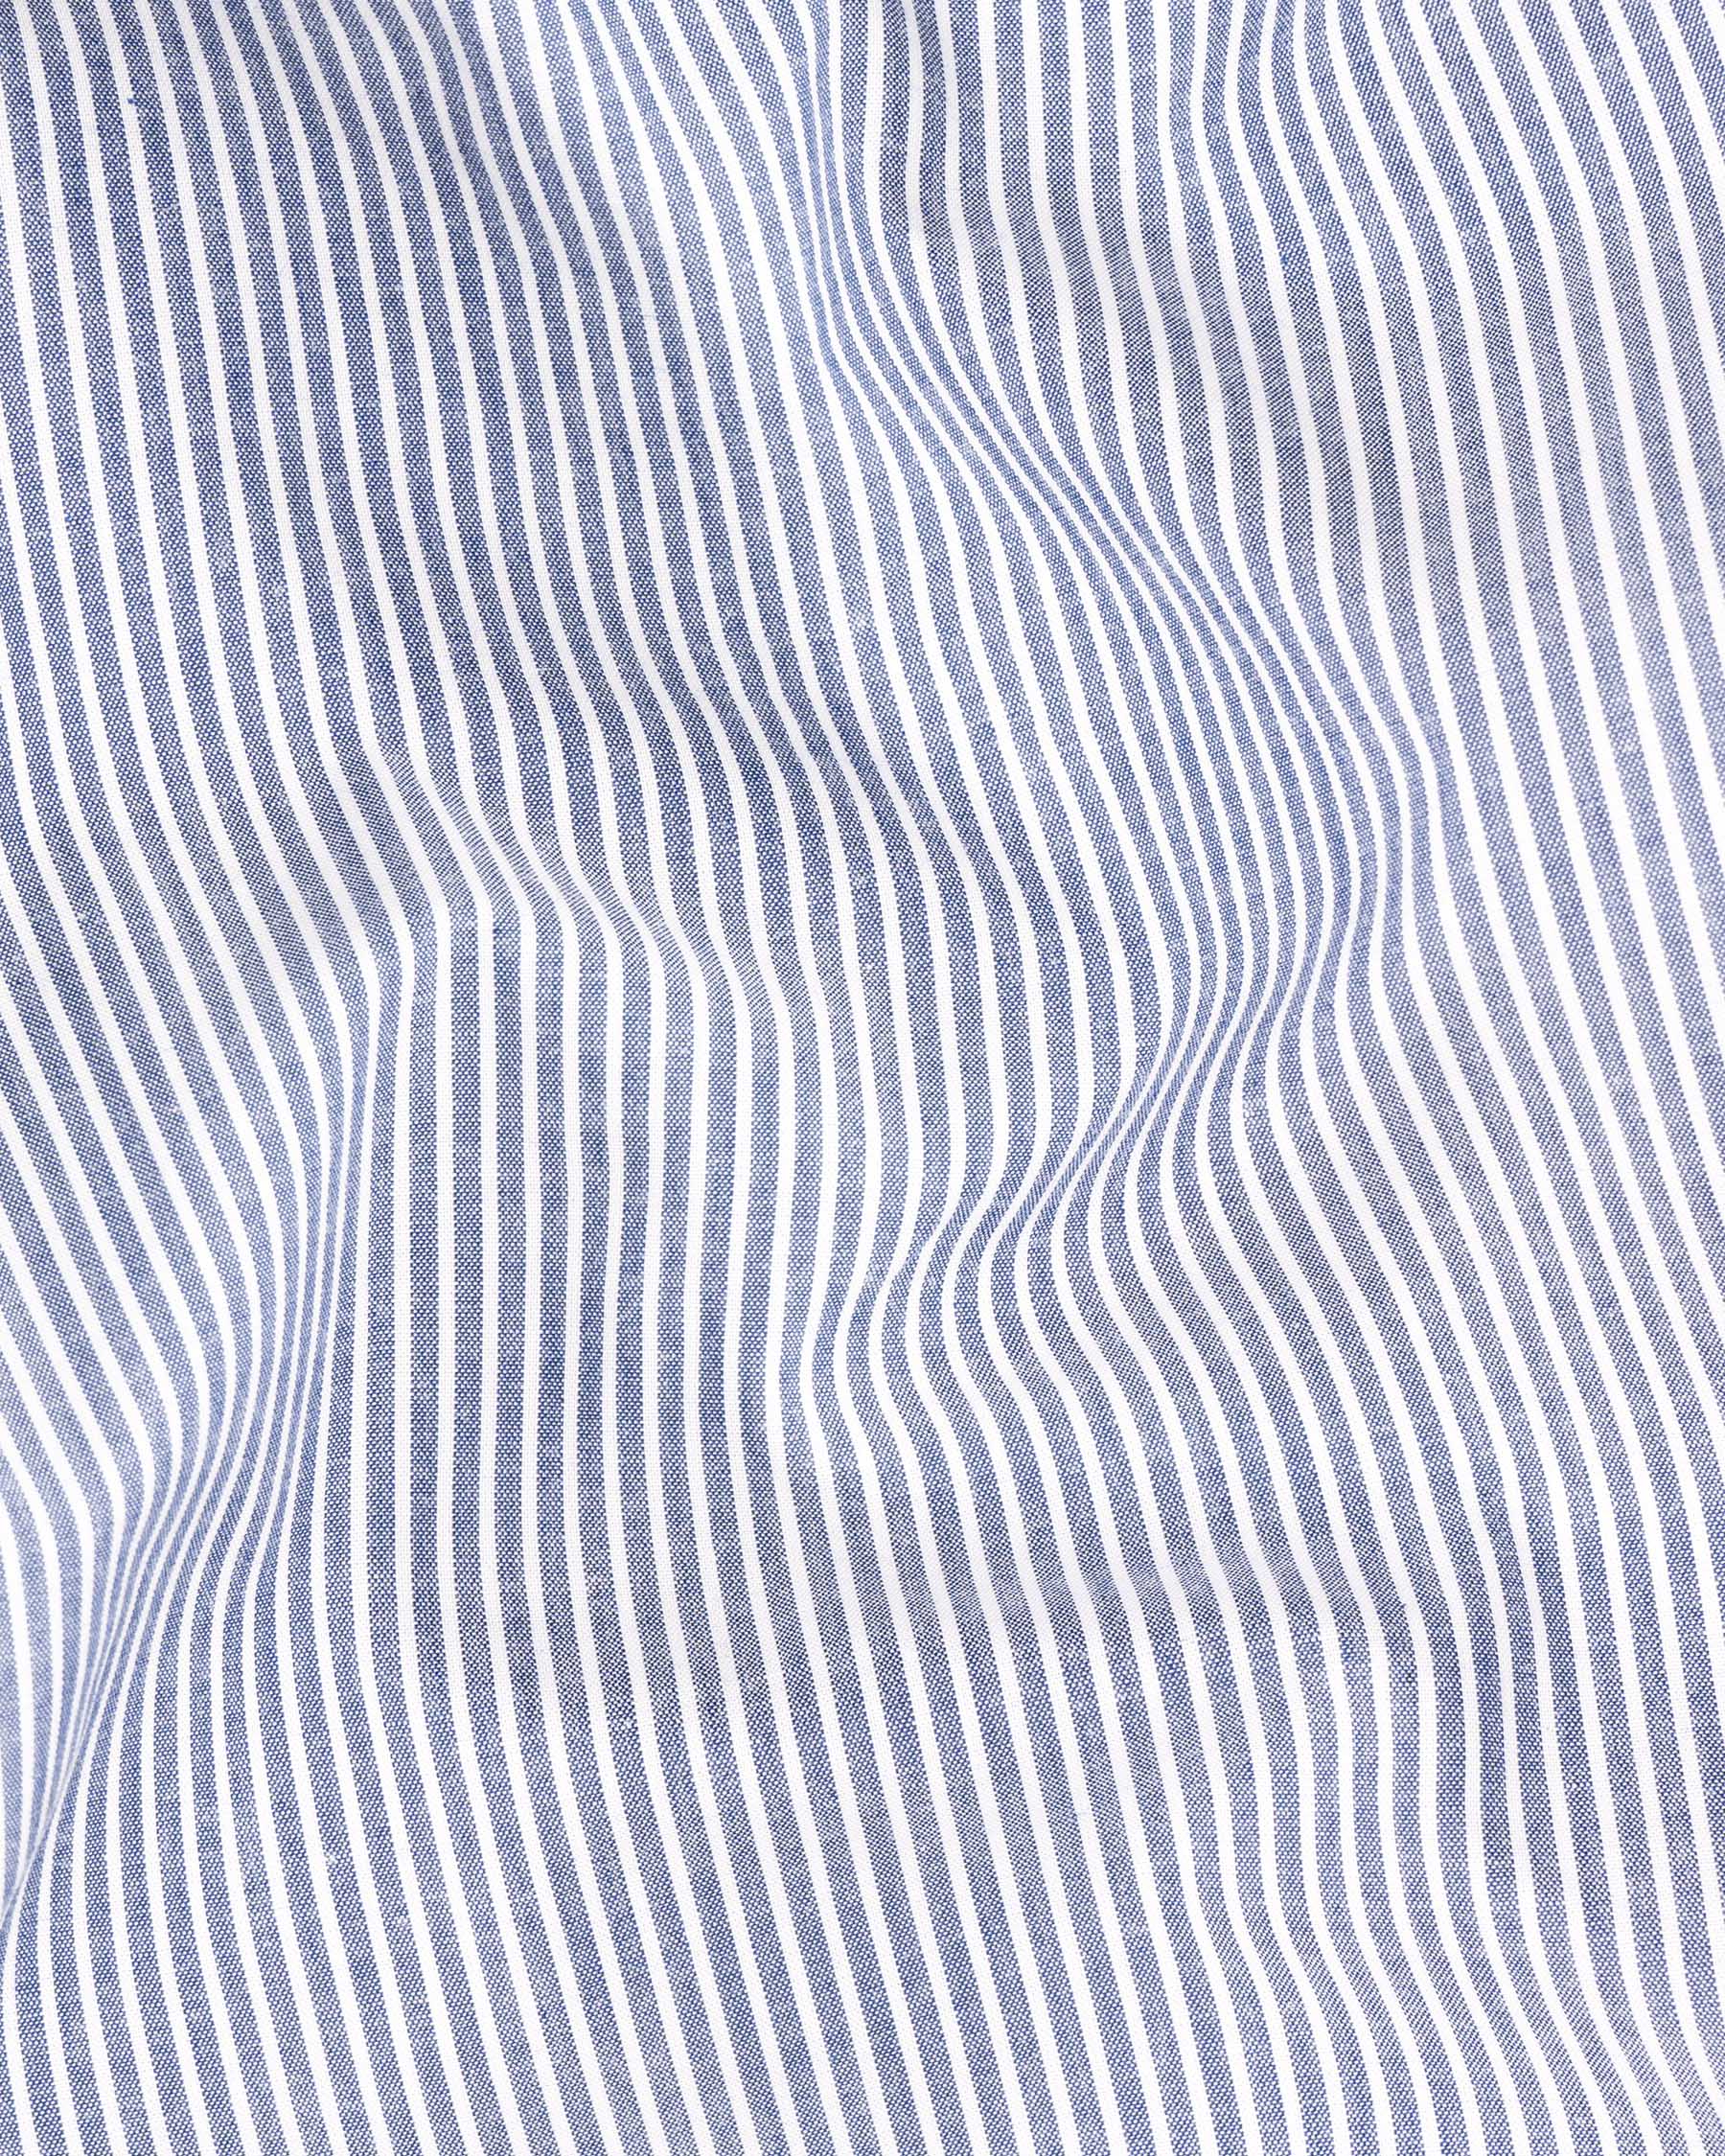 Cascade Blue Striped Premium Cotton Shirt 6773-38,6773-38,6773-39,6773-39,6773-40,6773-40,6773-42,6773-42,6773-44,6773-44,6773-46,6773-46,6773-48,6773-48,6773-50,6773-50,6773-52,6773-52